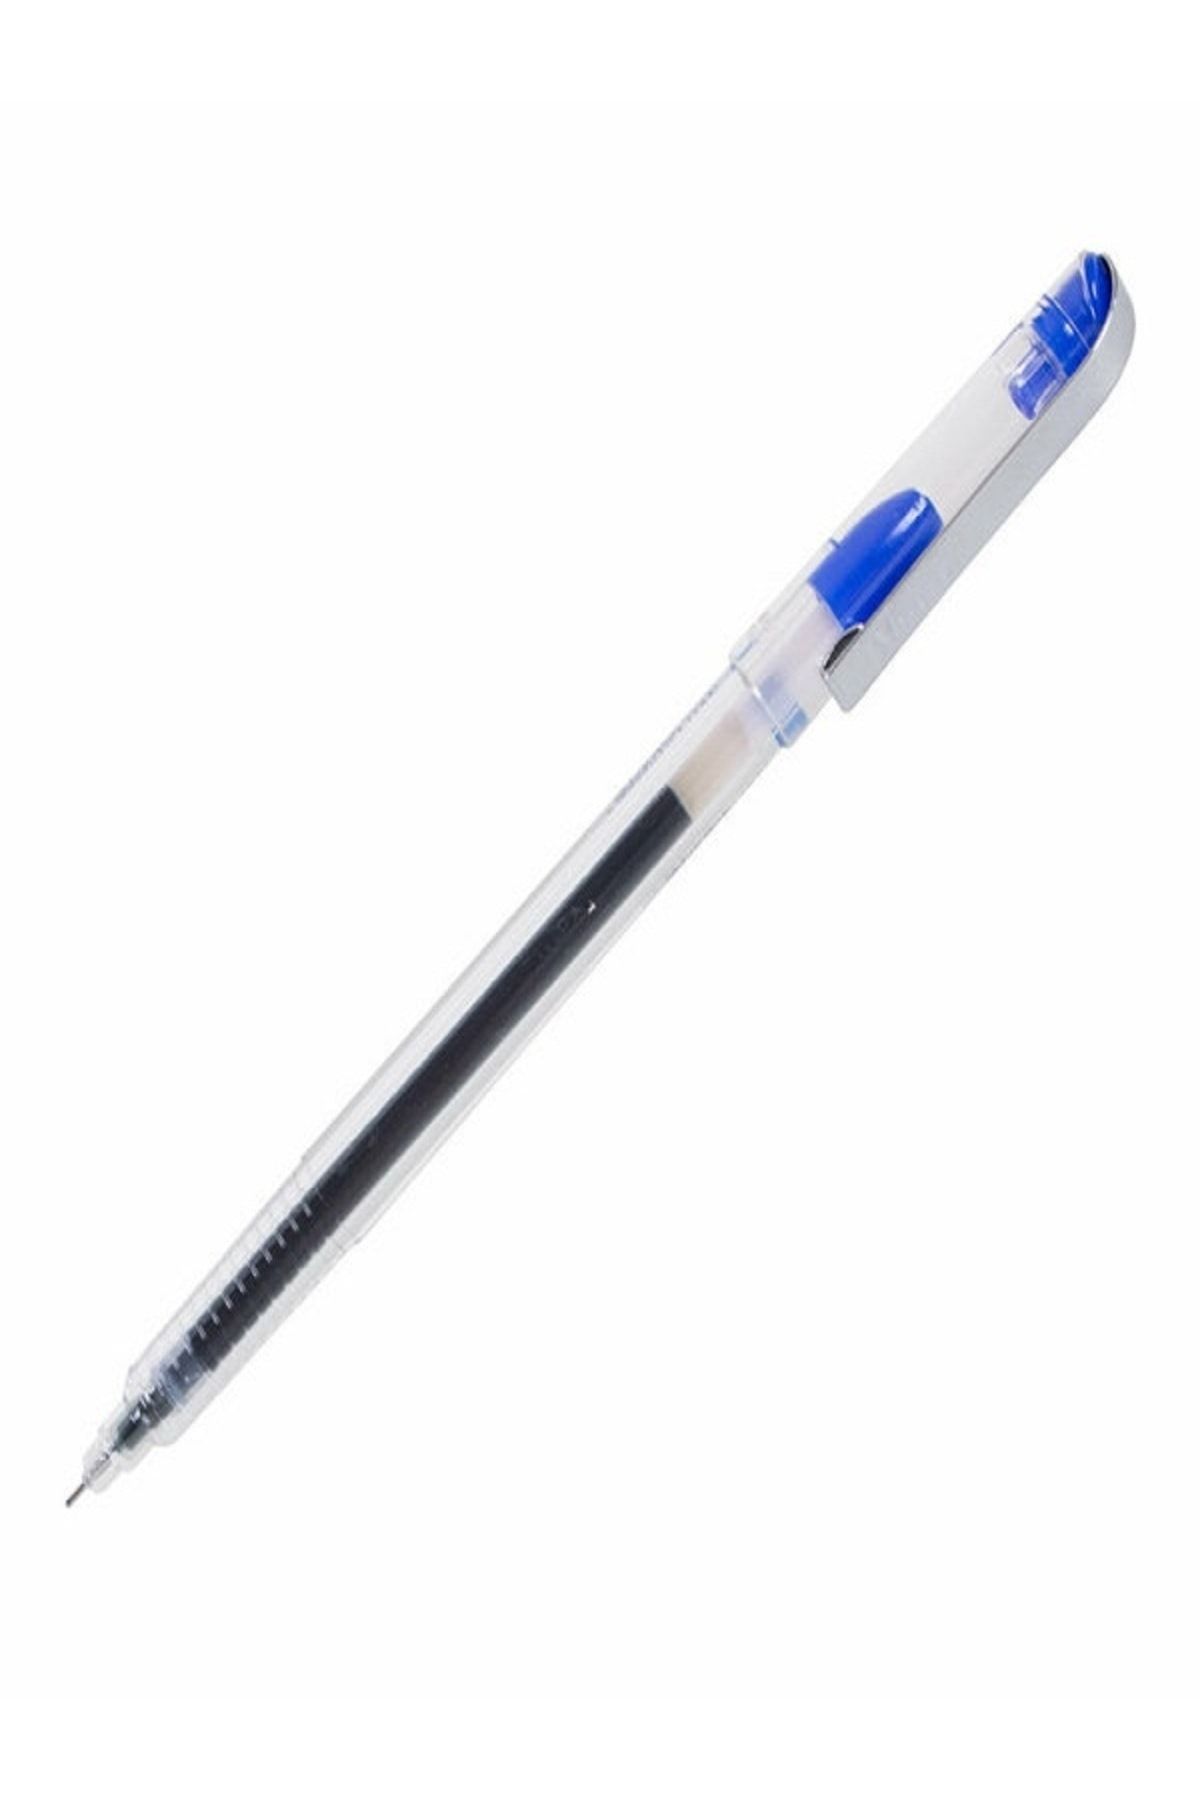 AOZ DEKOR Dong-A My-Jel Kalem 0.5mm İğne Uçlu Mavi